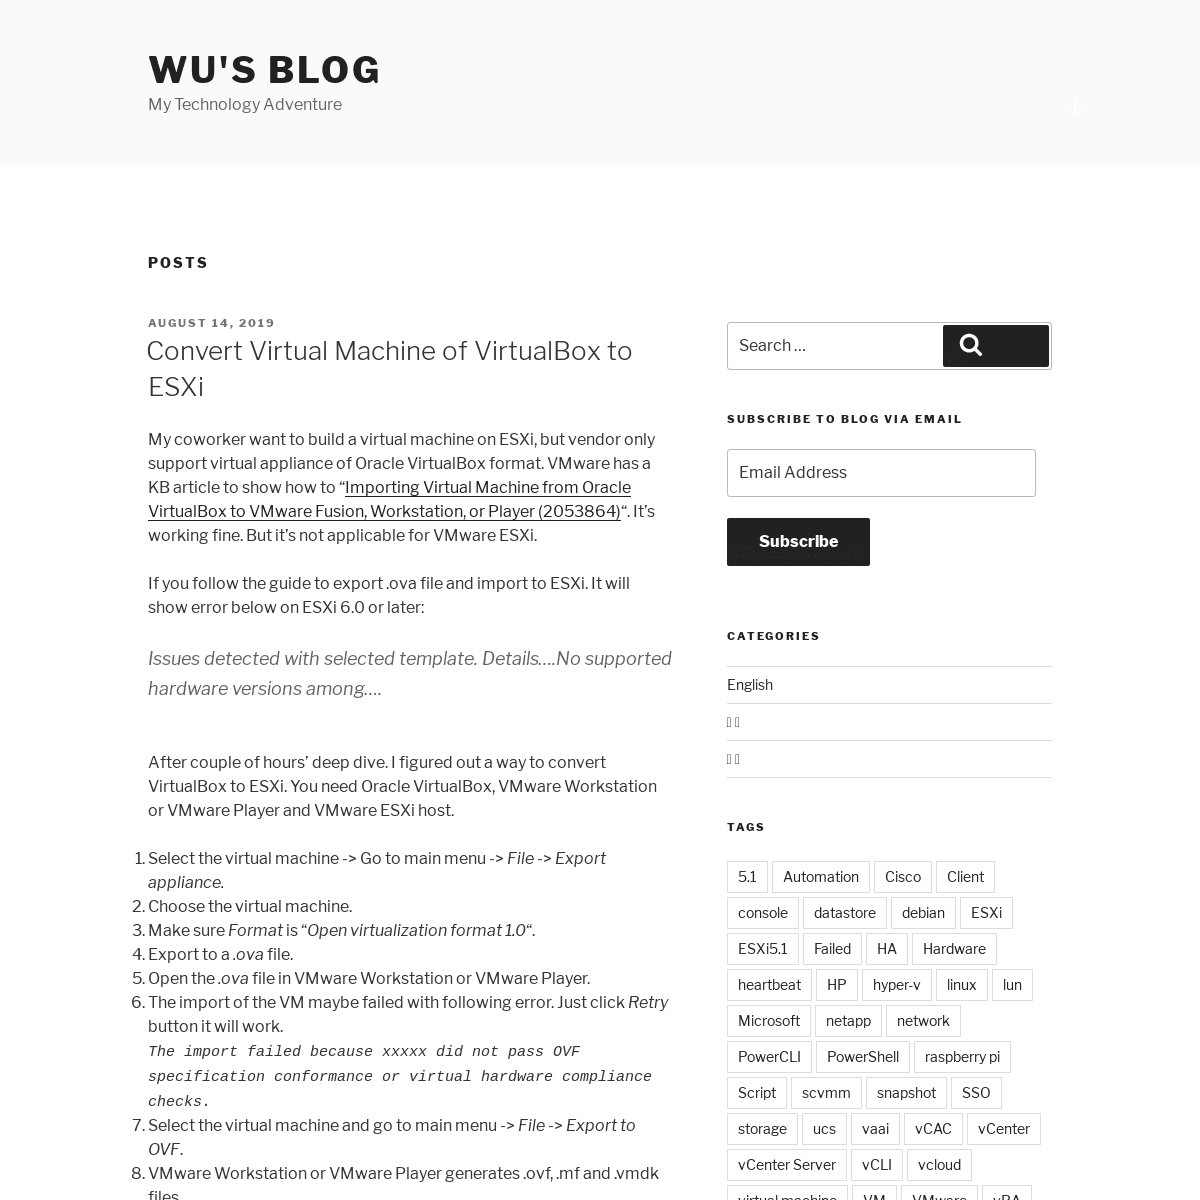 Wu's Blog - My Technology Adventure